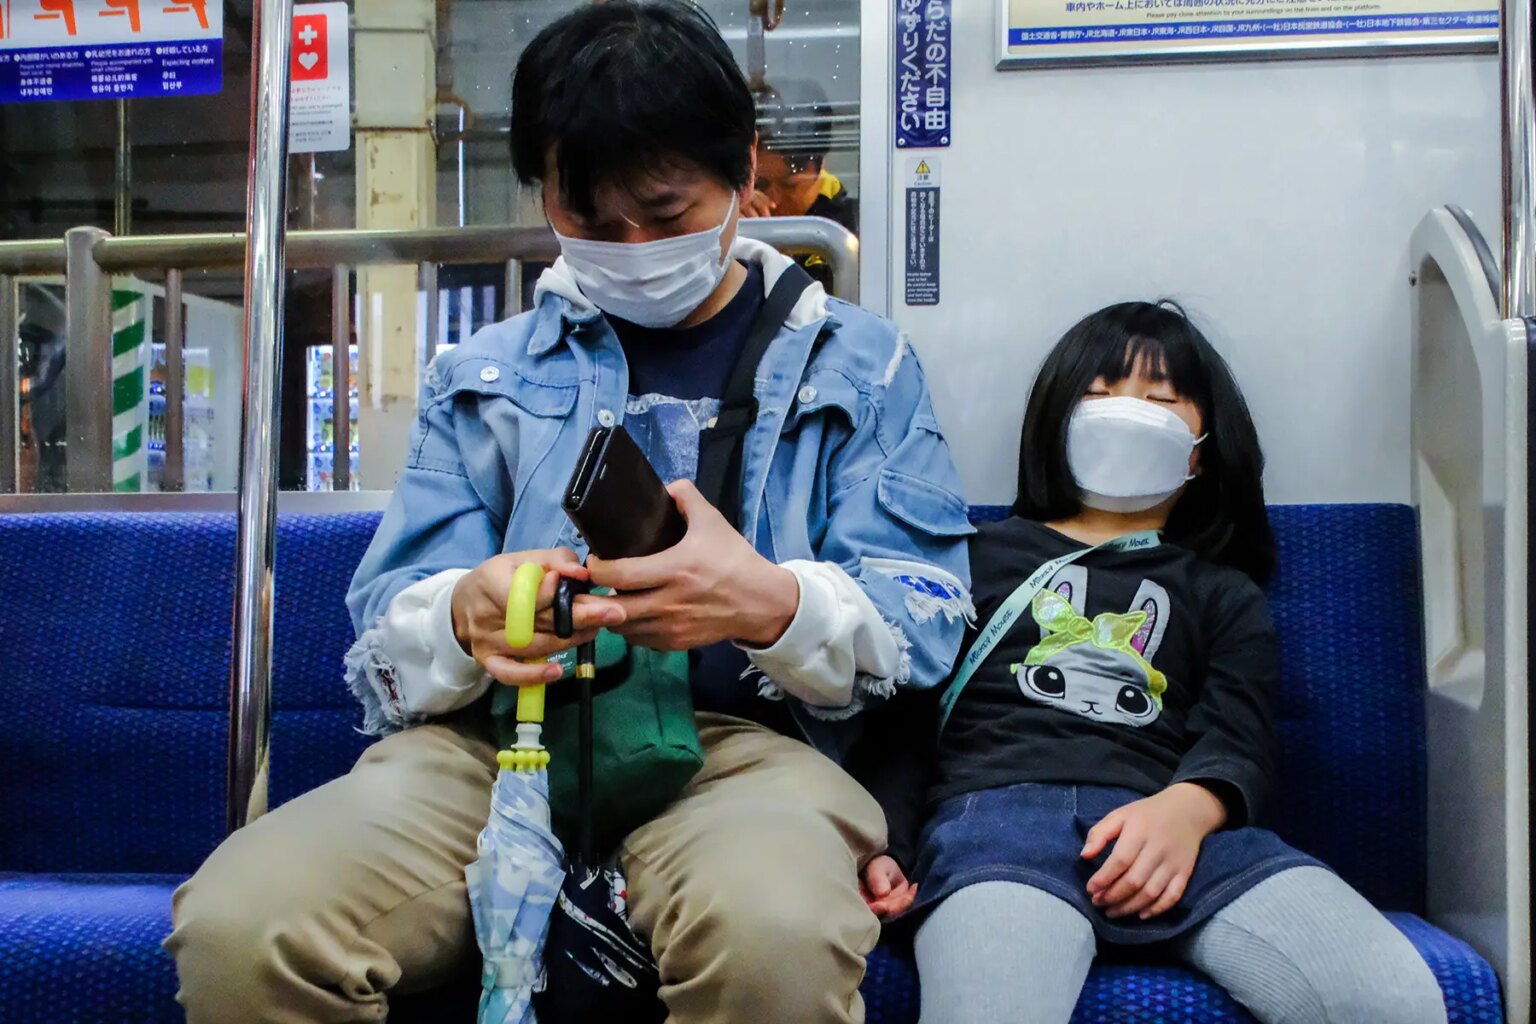 Children healthcare Japan